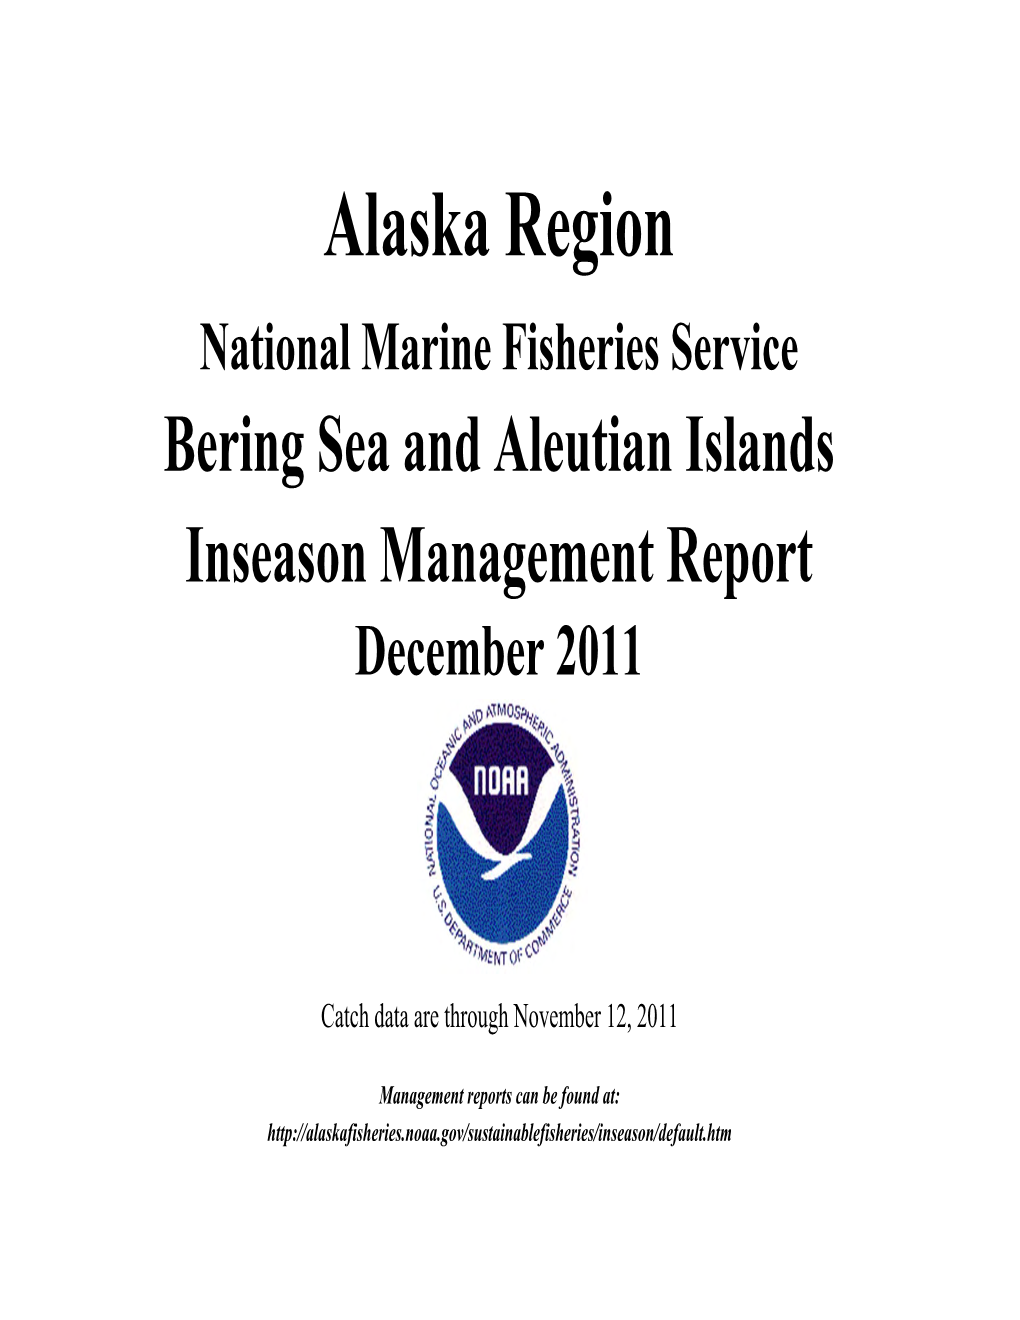 Alaska Region National Marine Fisheries Service Bering Sea and Aleutian Islands Inseason Management Report December 2011